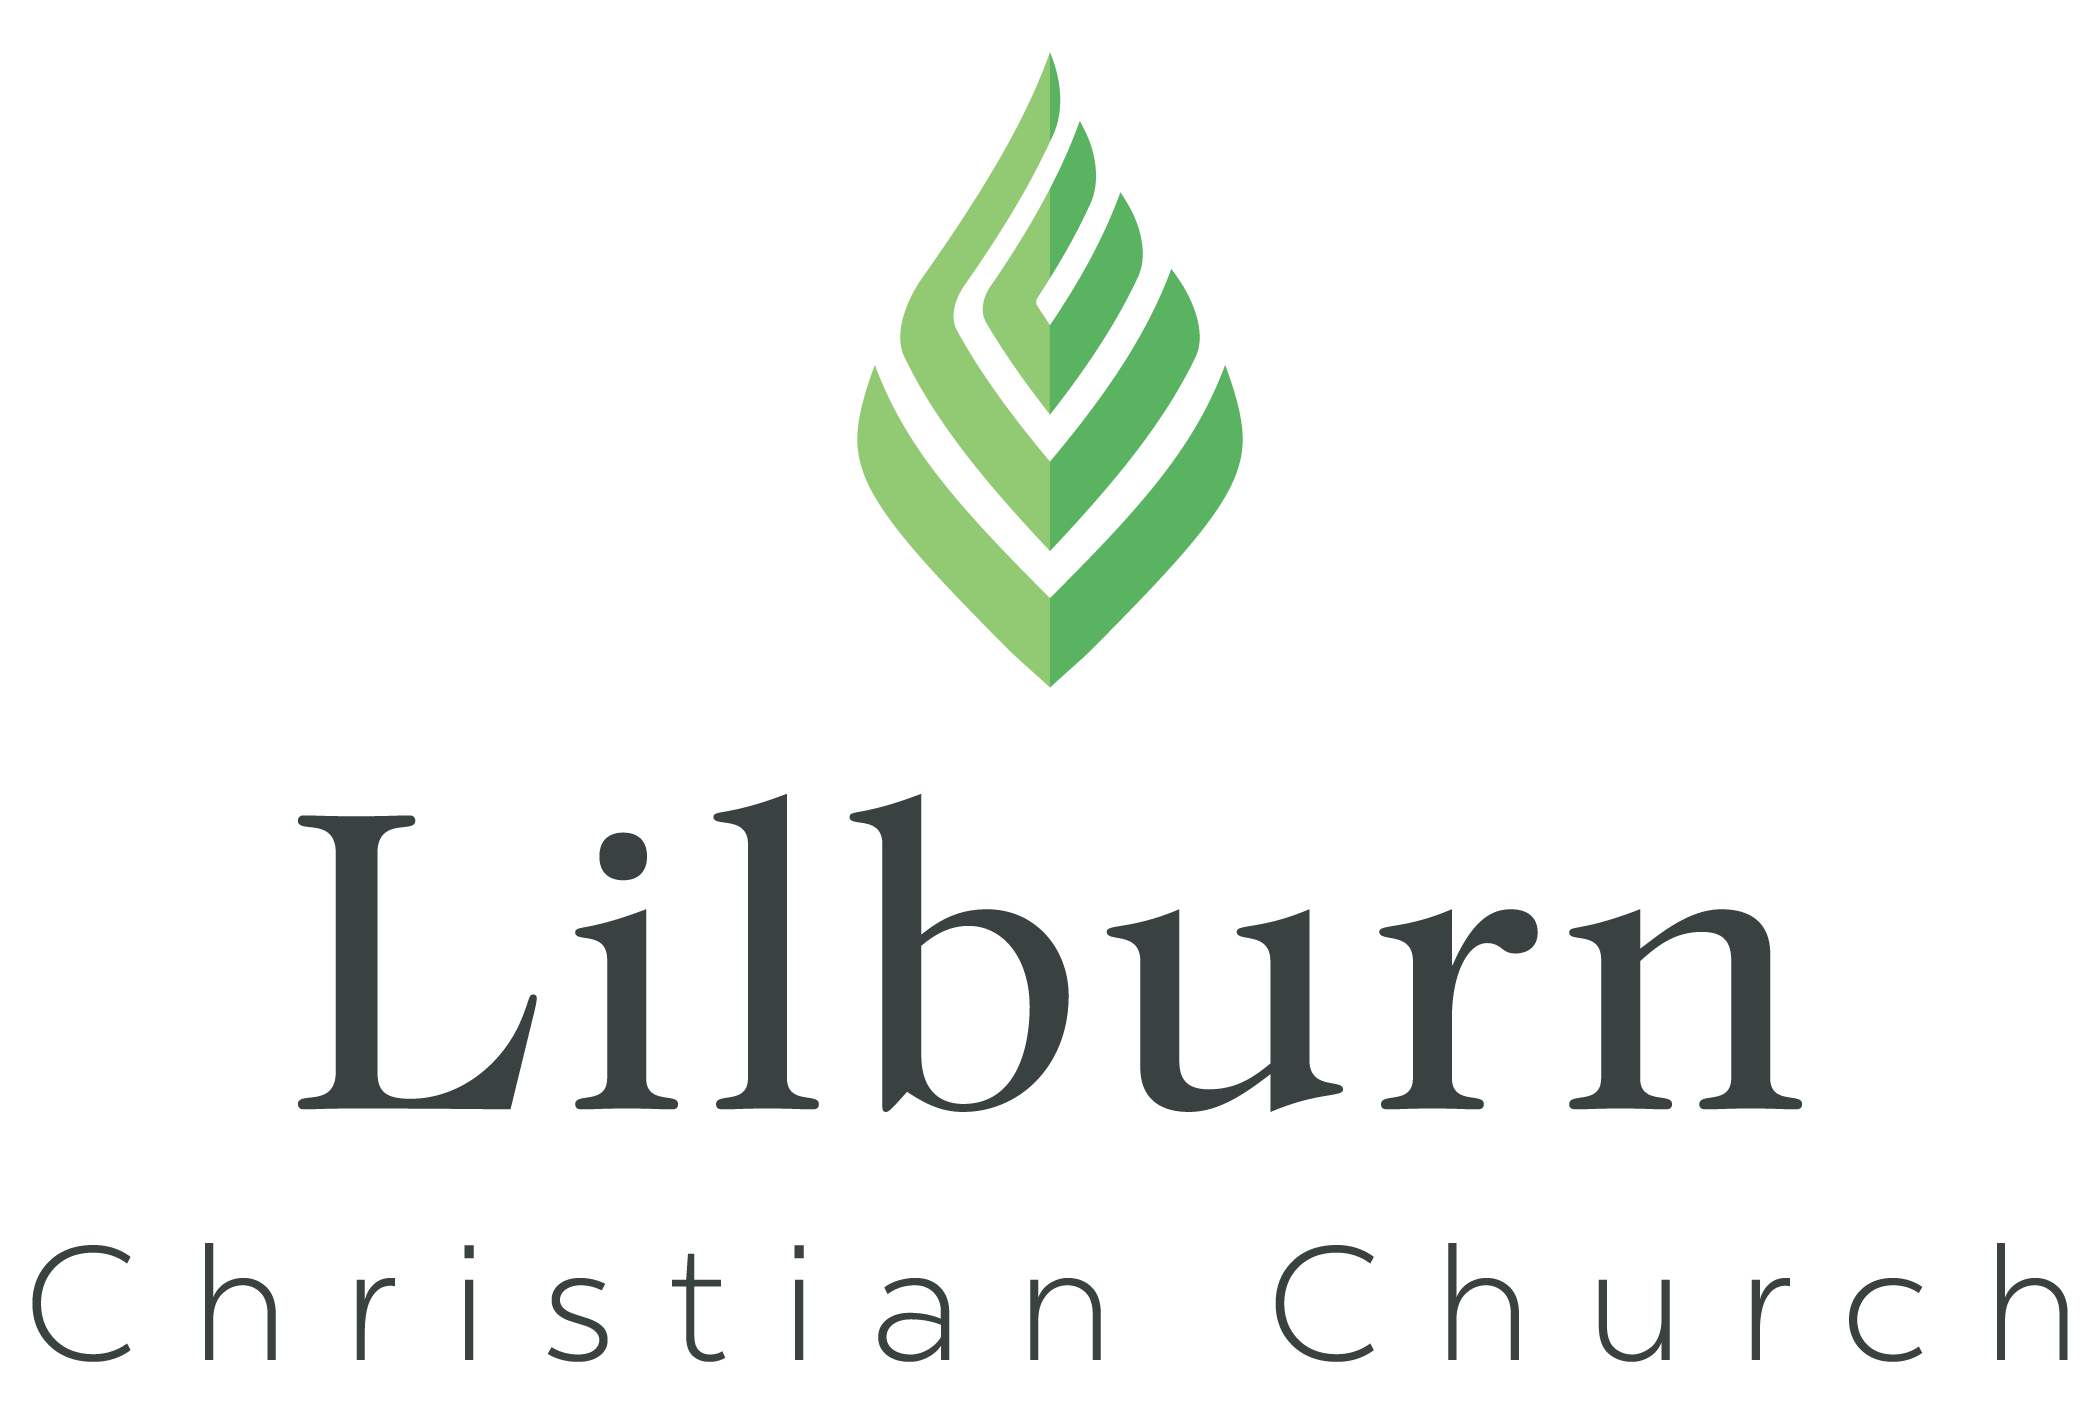 LILBURN CHRISTIAN CHURCH